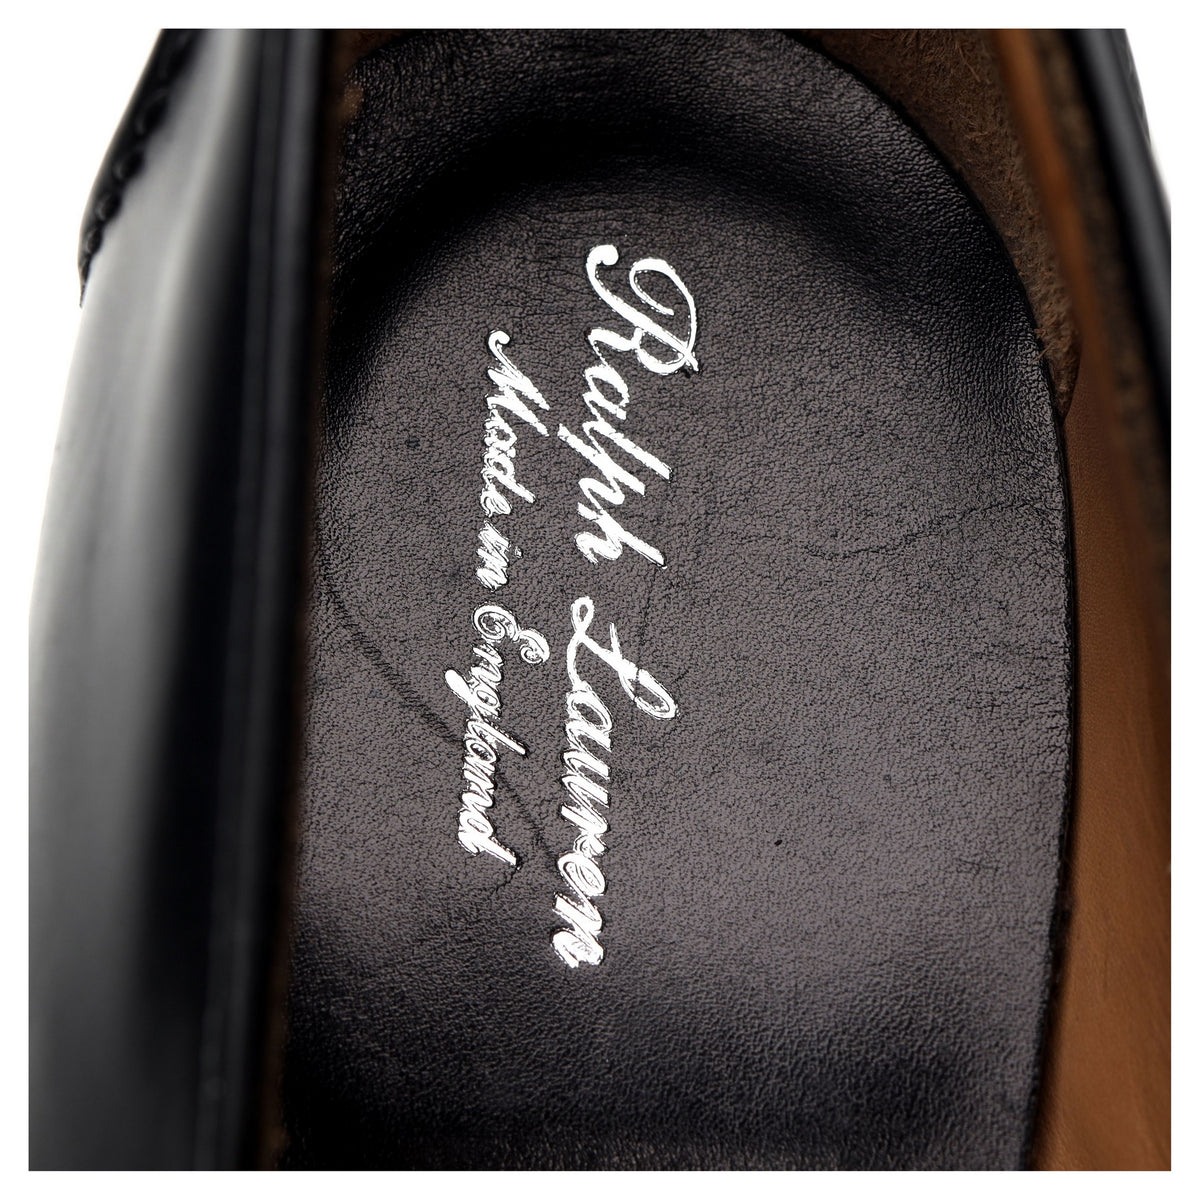 Ralph Lauren Black Leather Split Toe Loafers UK 7.5